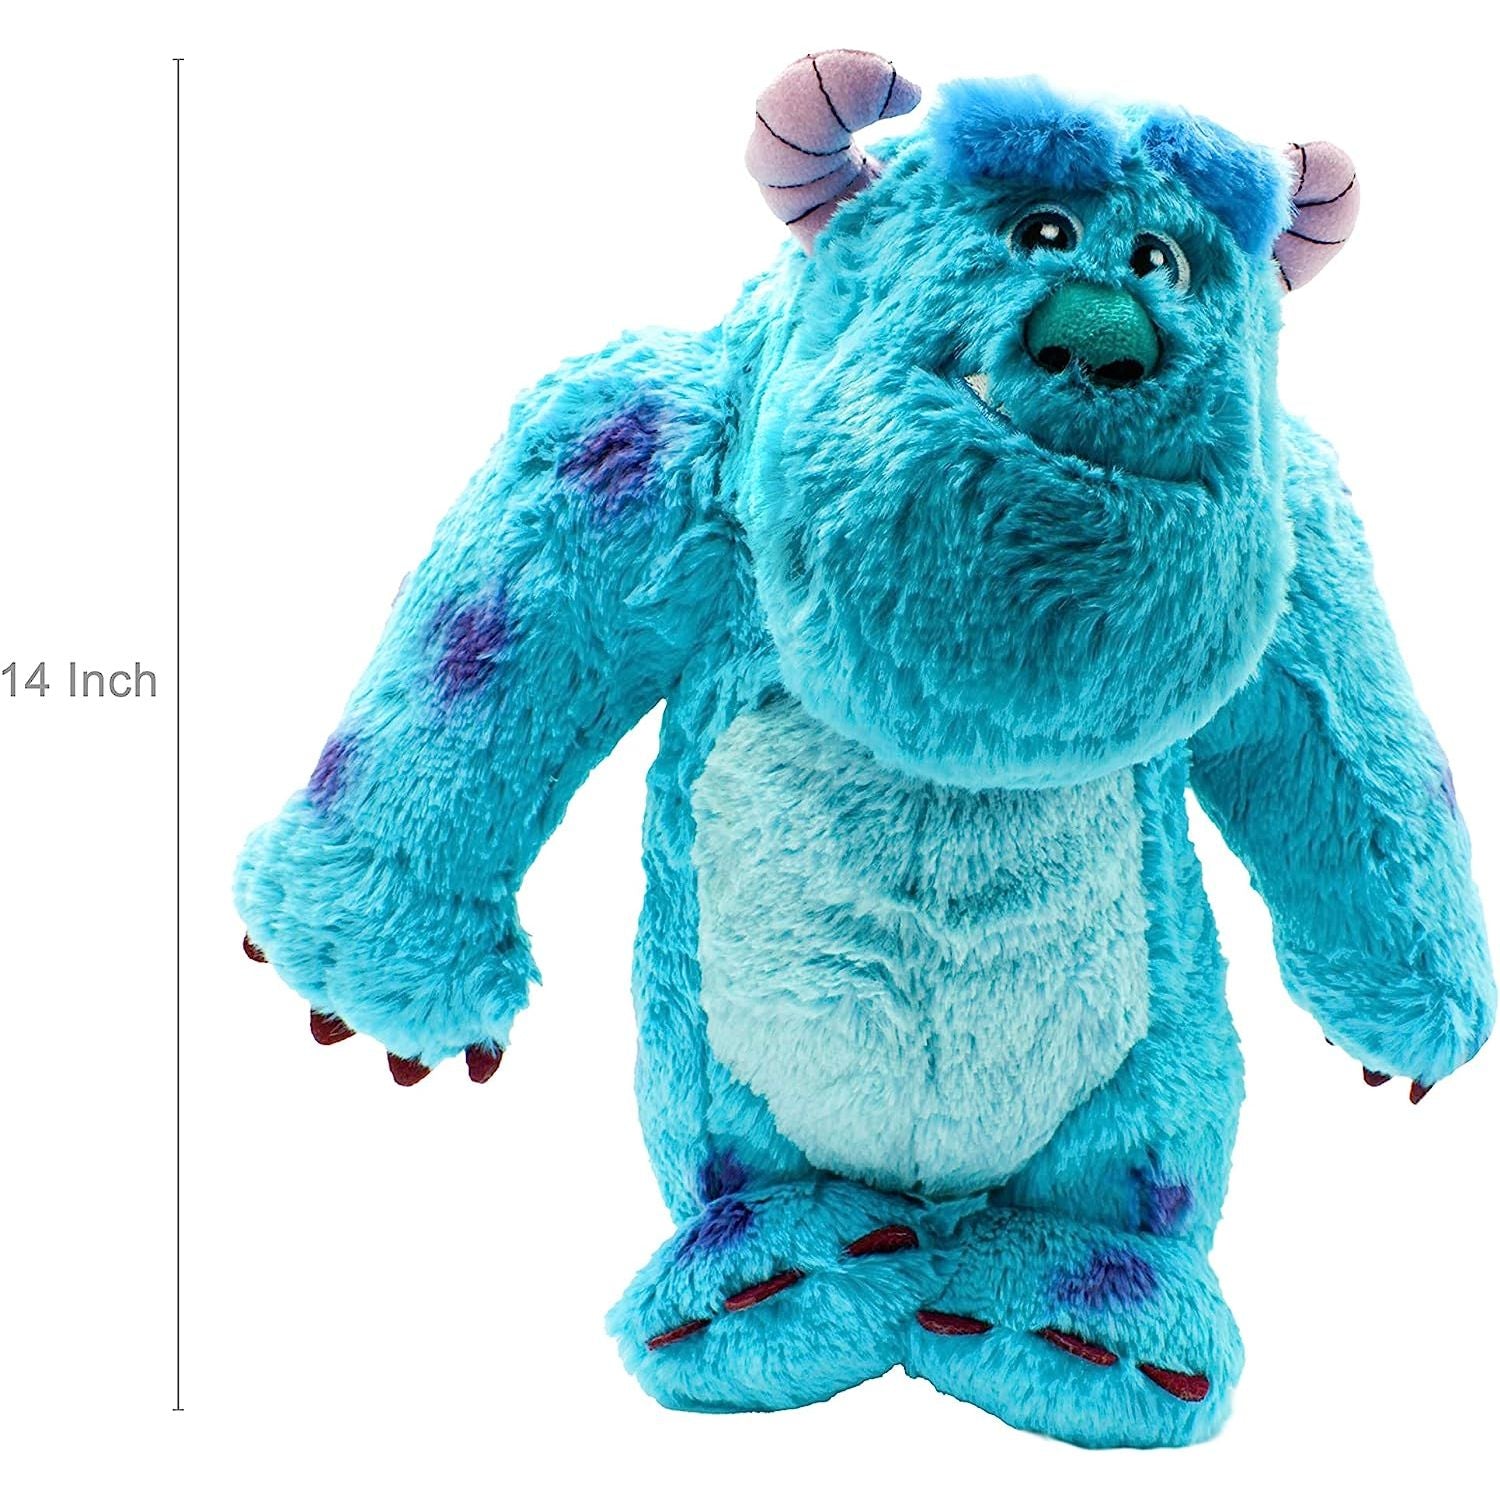 Disney - Pixar - Monsters Inc. - Soft Plush Sulley - 14Inch - Heretoserveyou